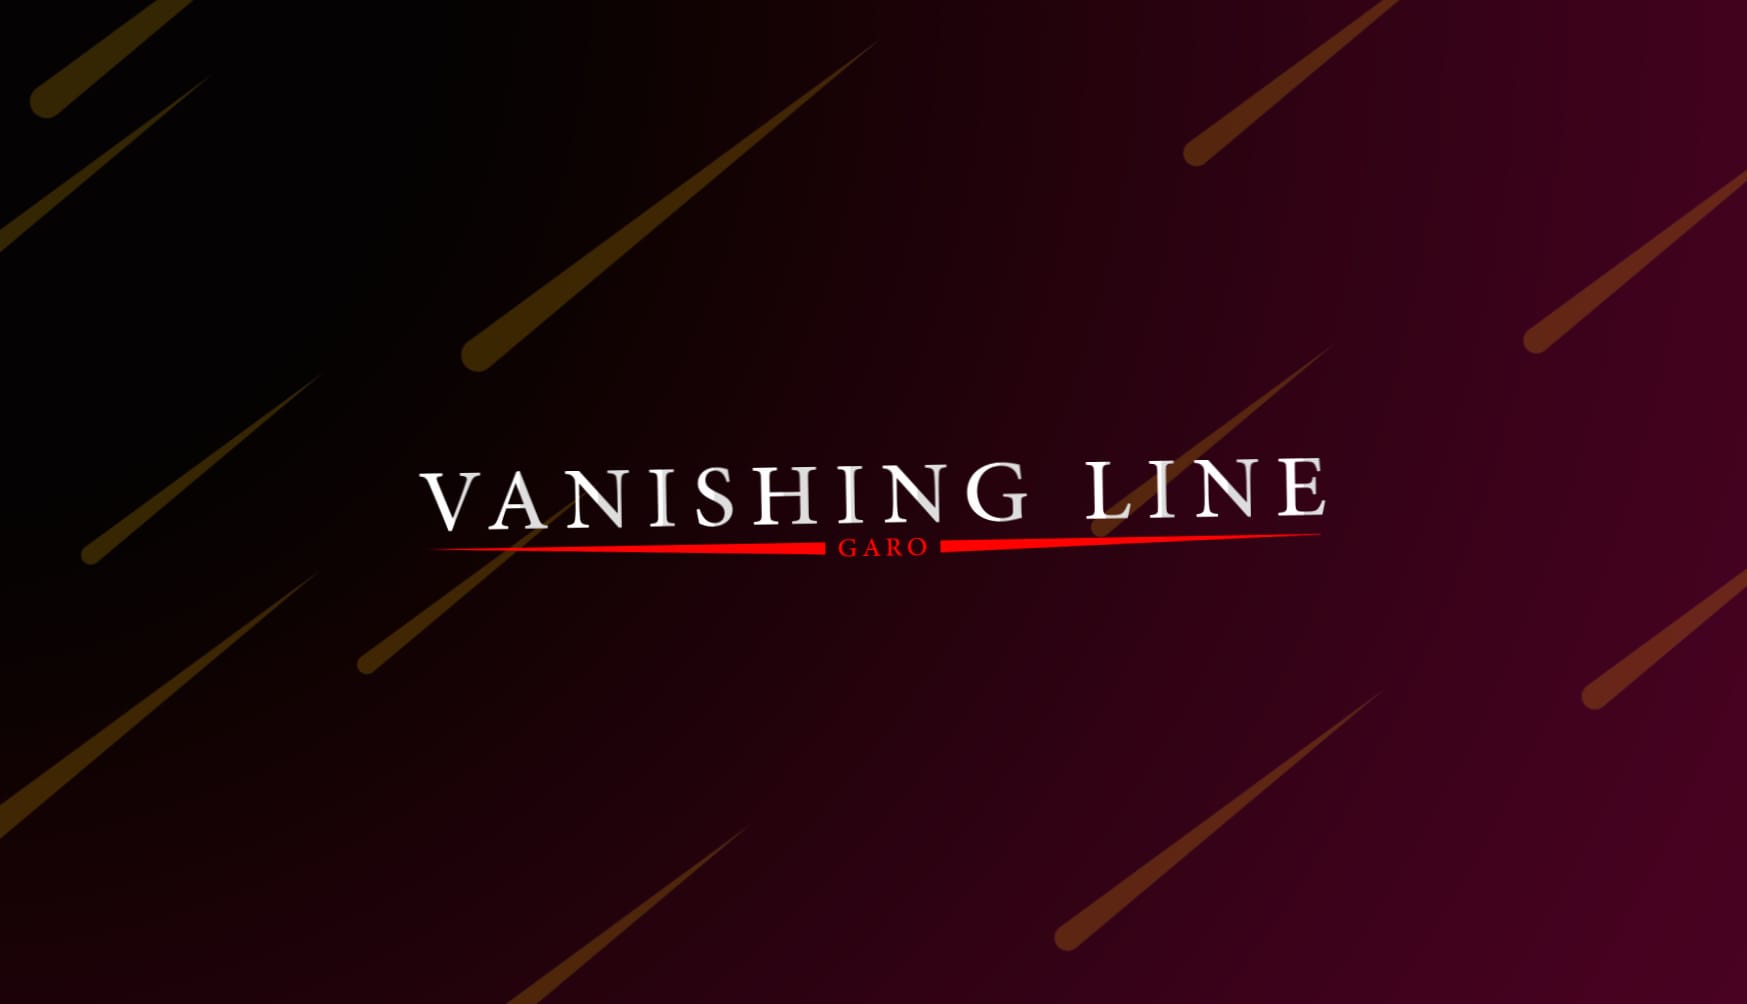 Garo Vanishing Line at 1280 x 960 size wallpapers HD quality